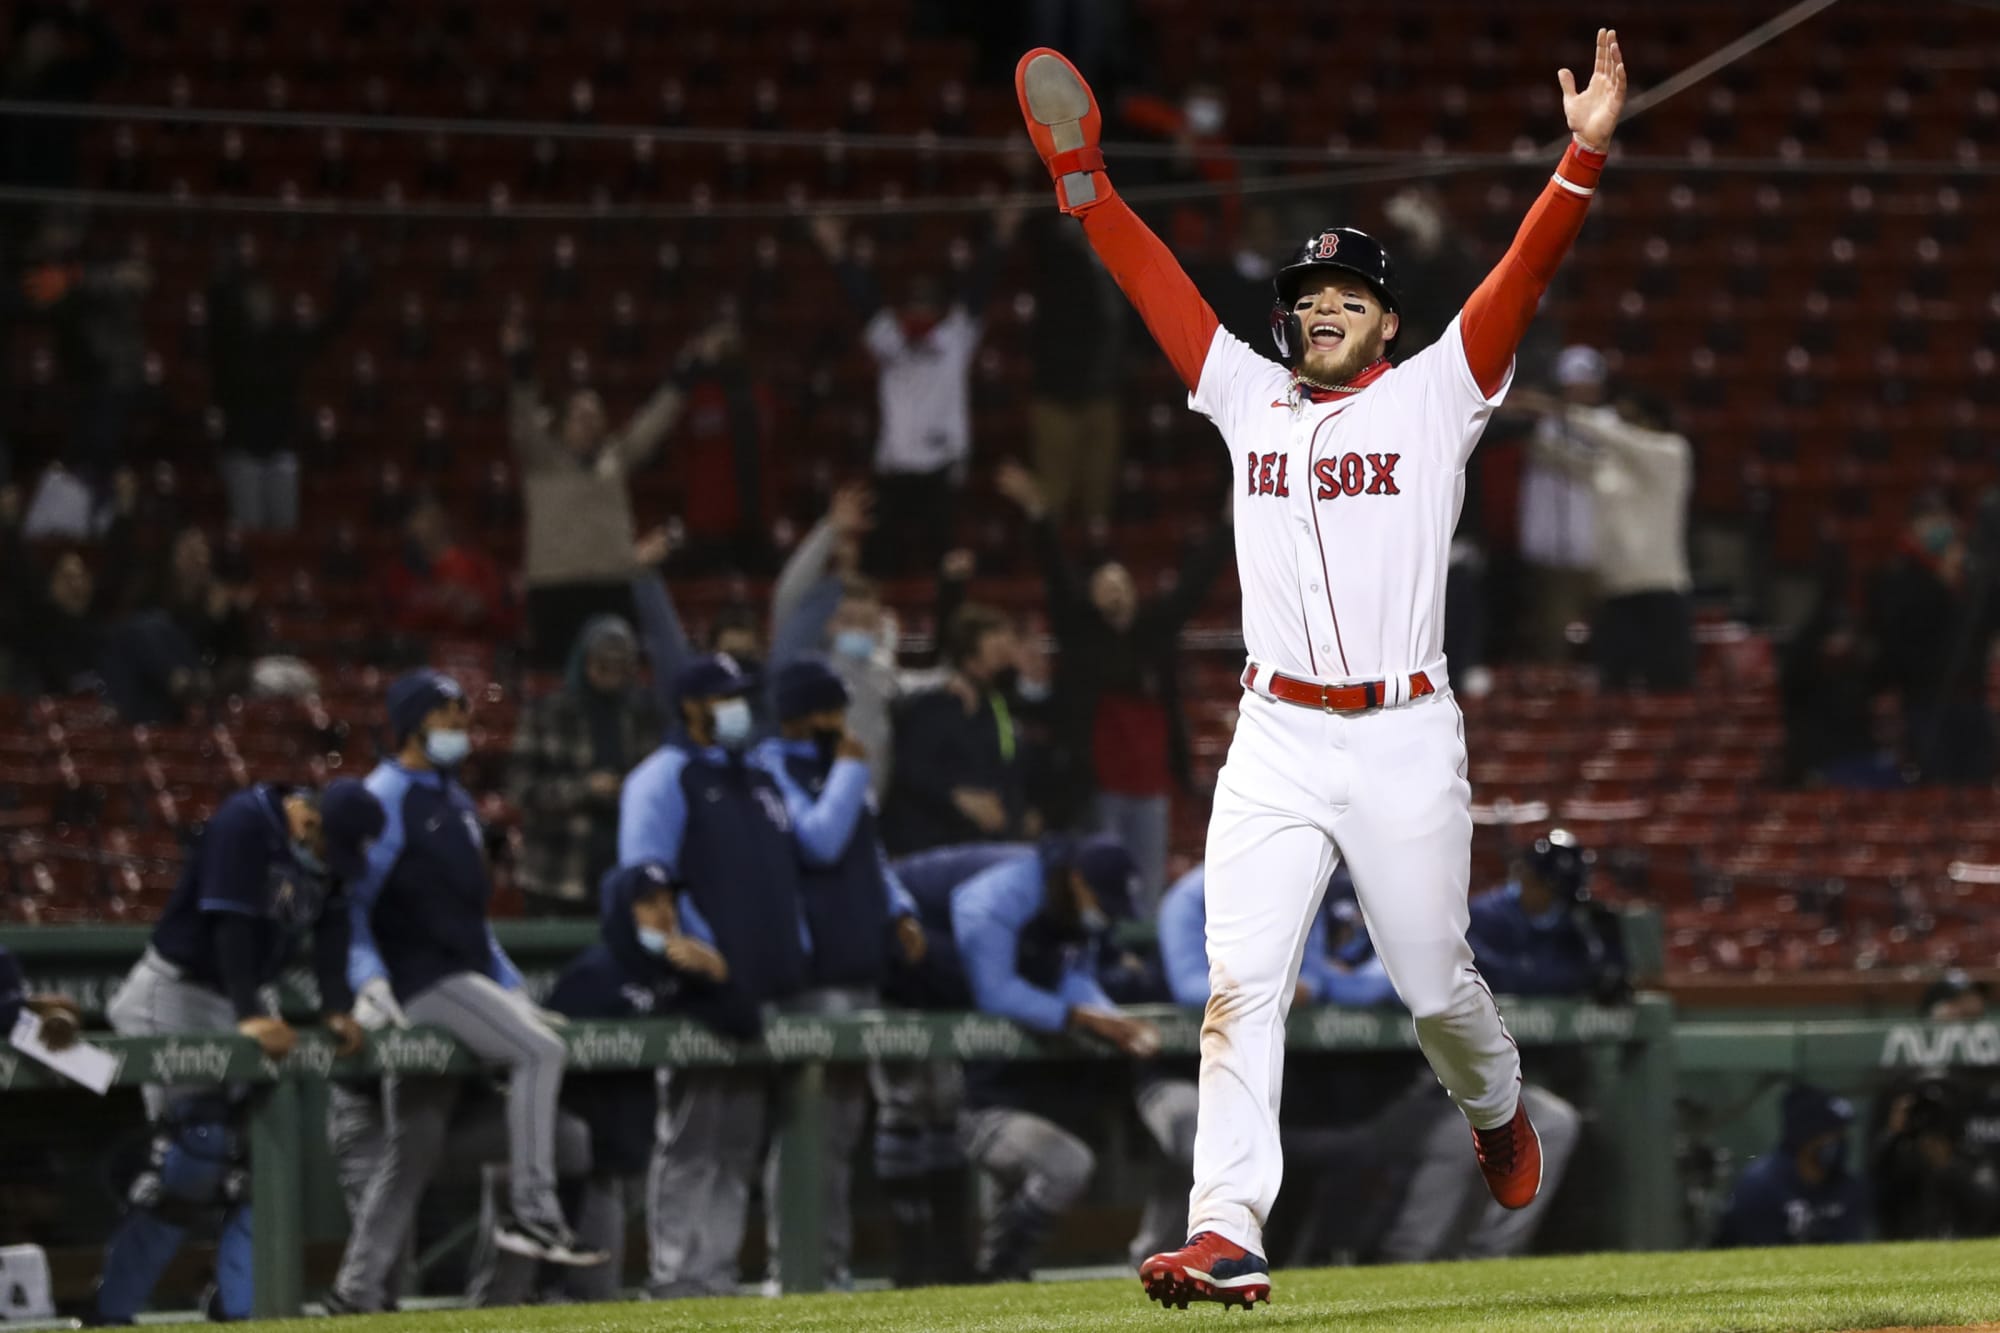 Red Sox home run celebration singlehandedly making baseball fun again